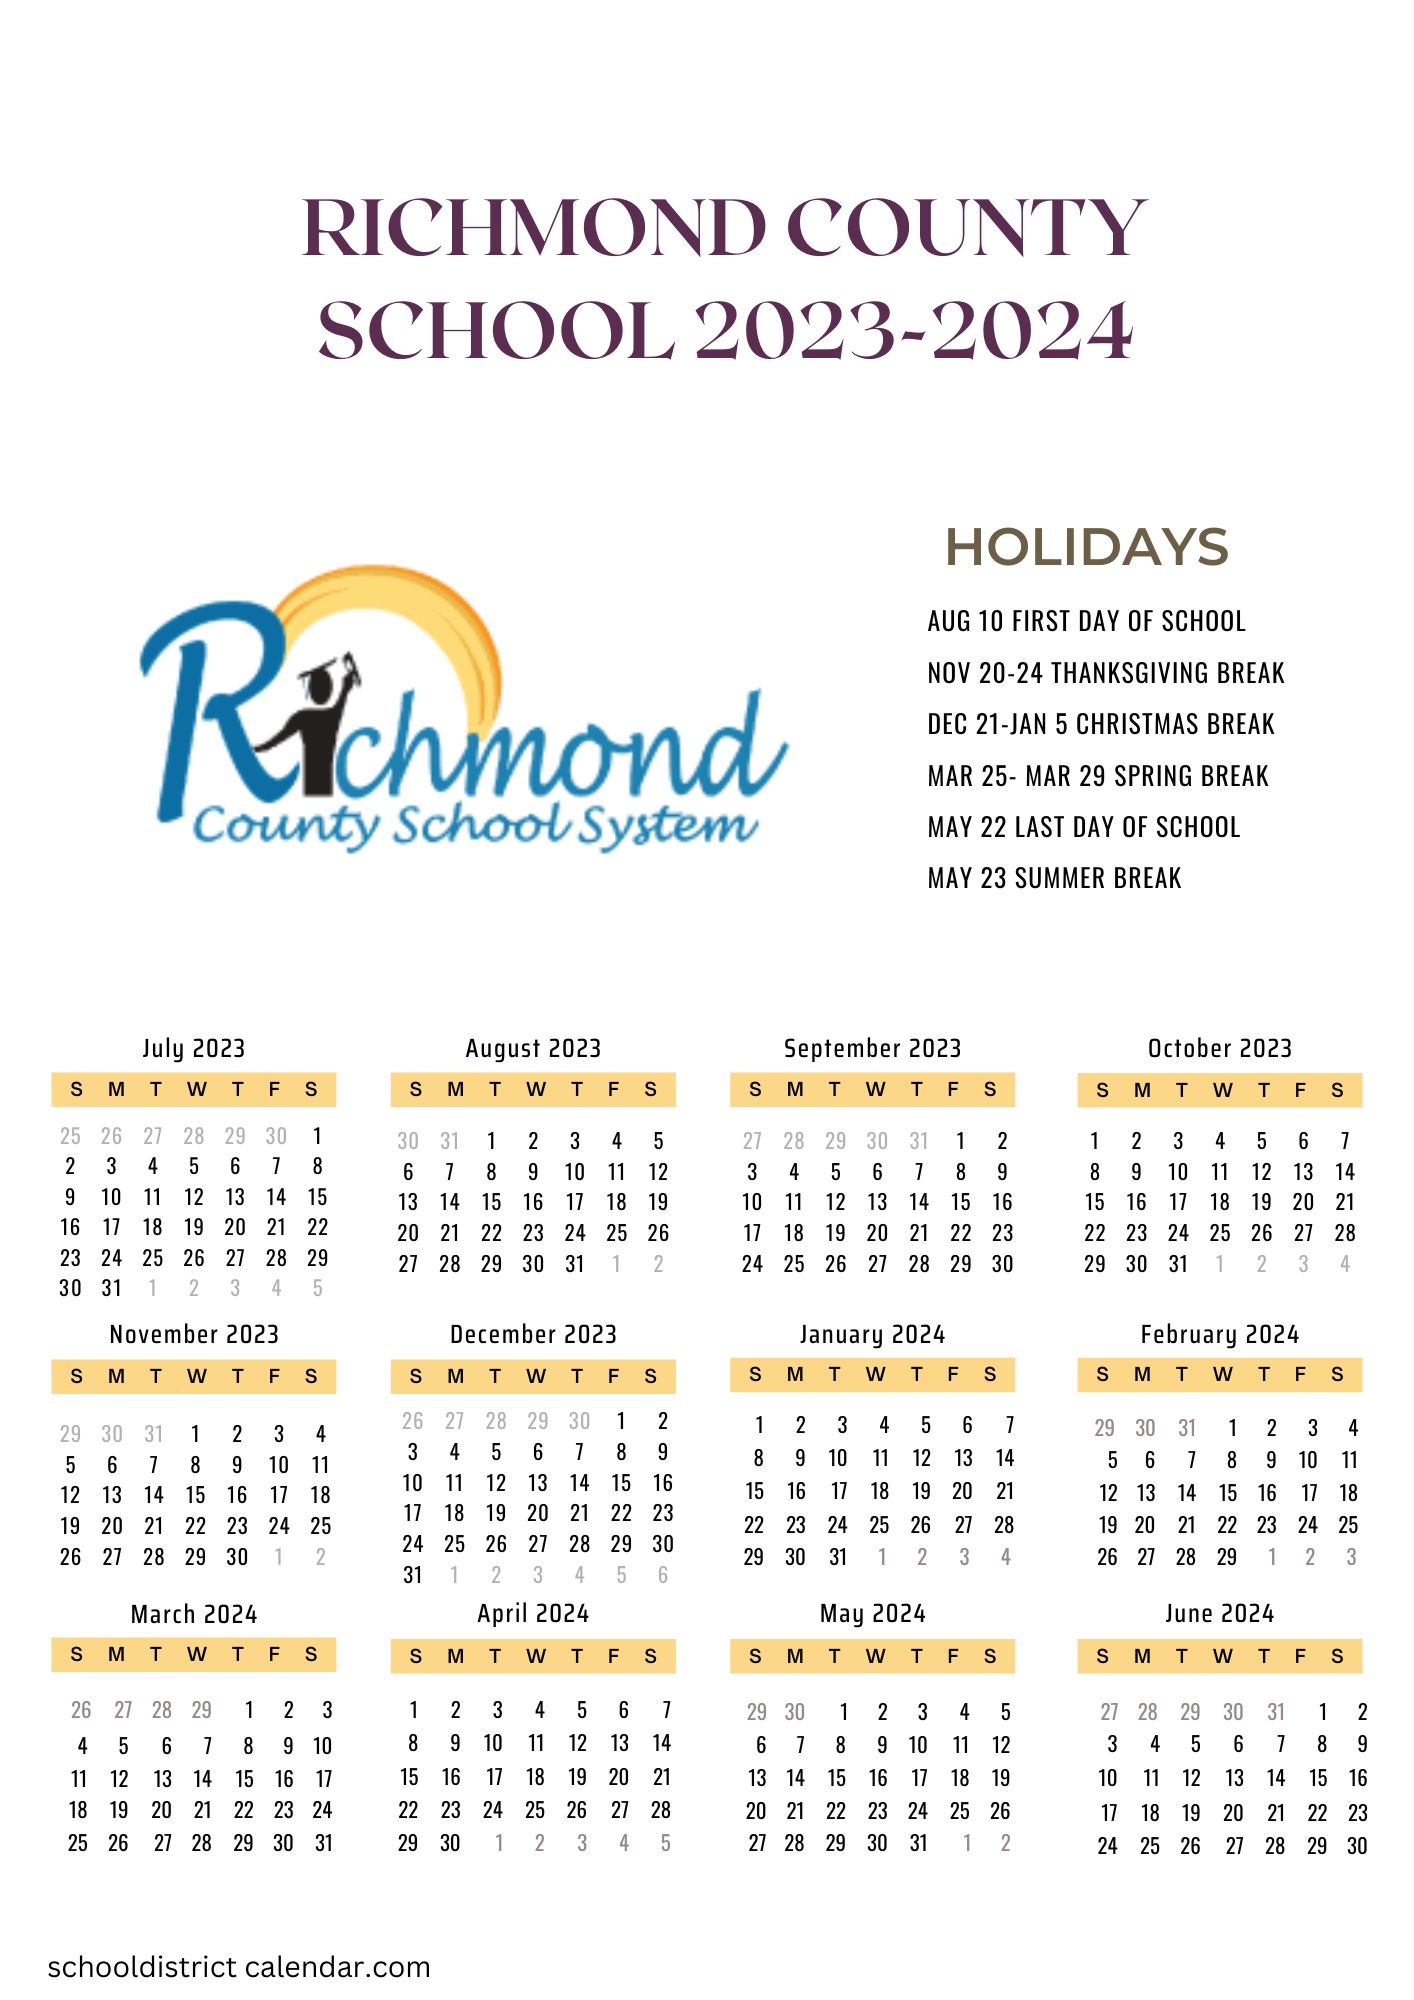 richmond-county-schools-calendar-holidays-2023-2024